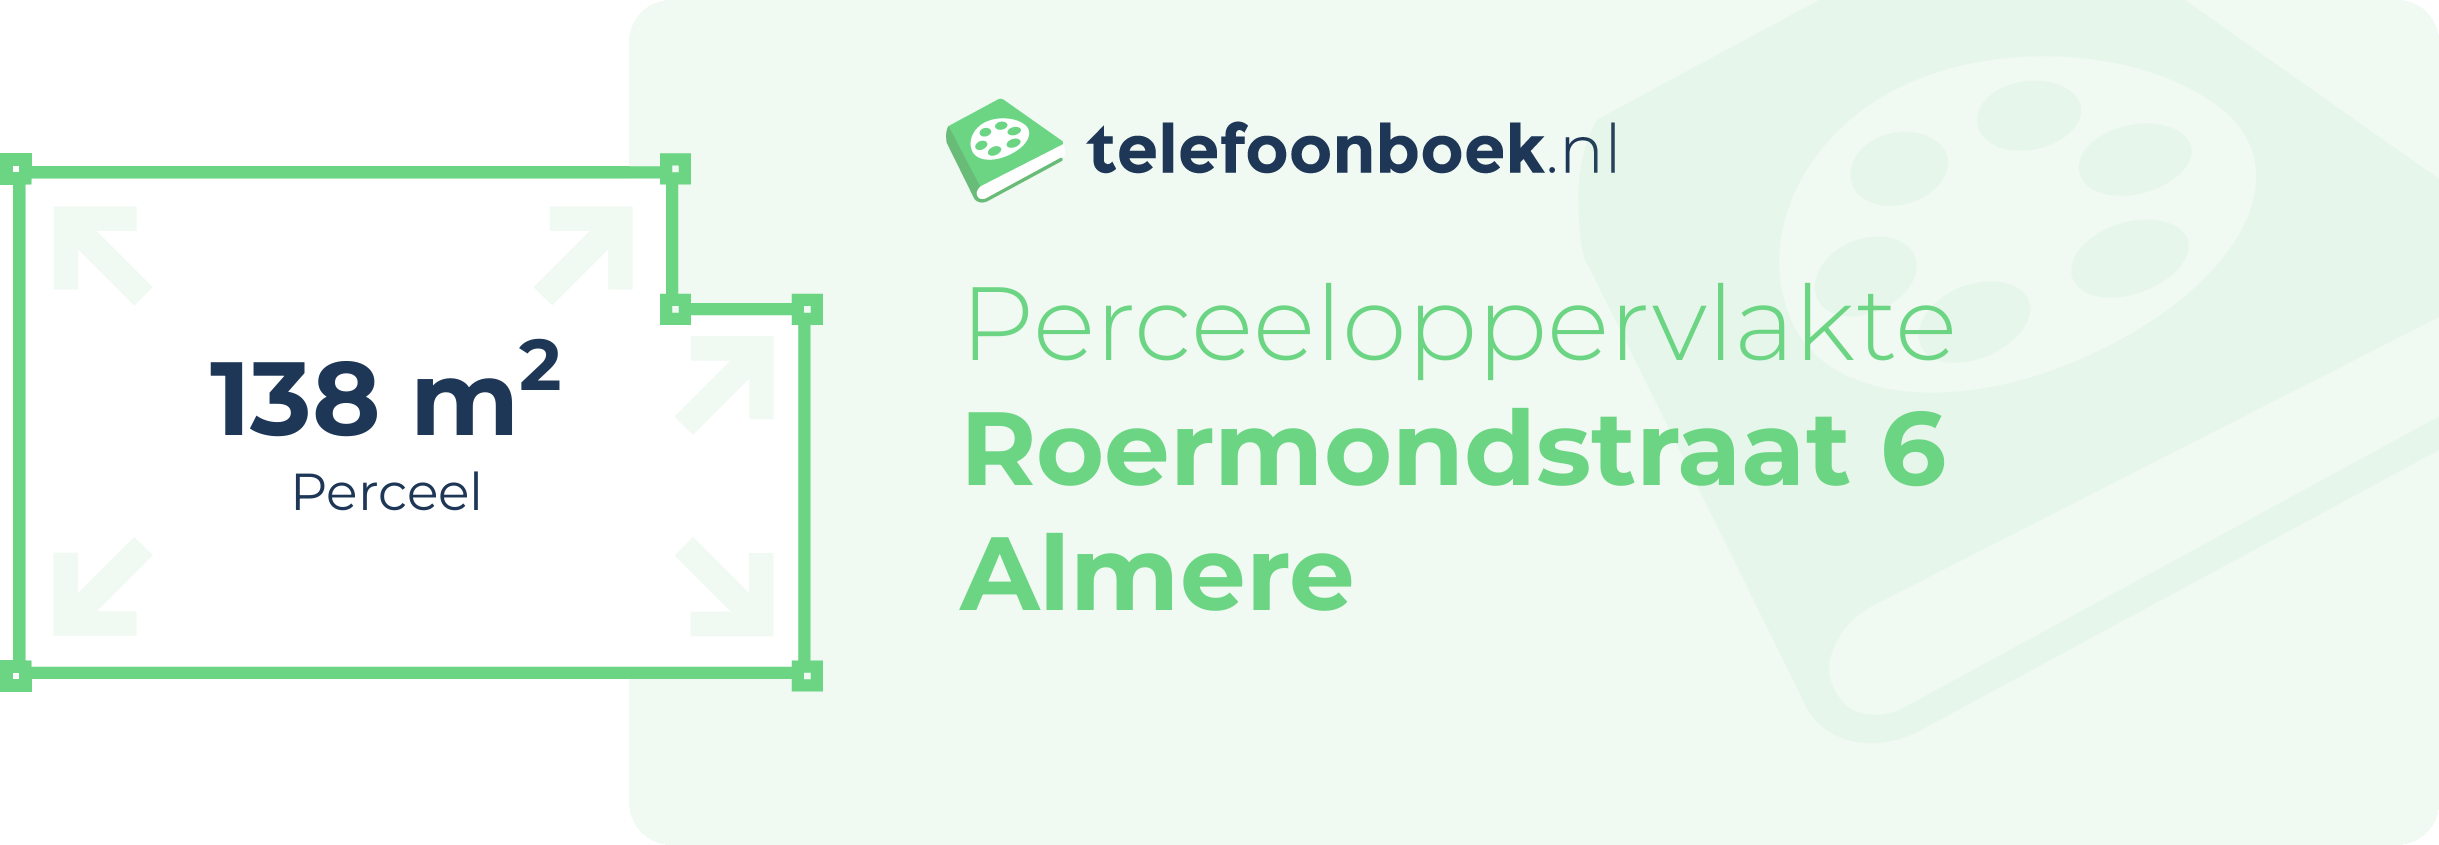 Perceeloppervlakte Roermondstraat 6 Almere